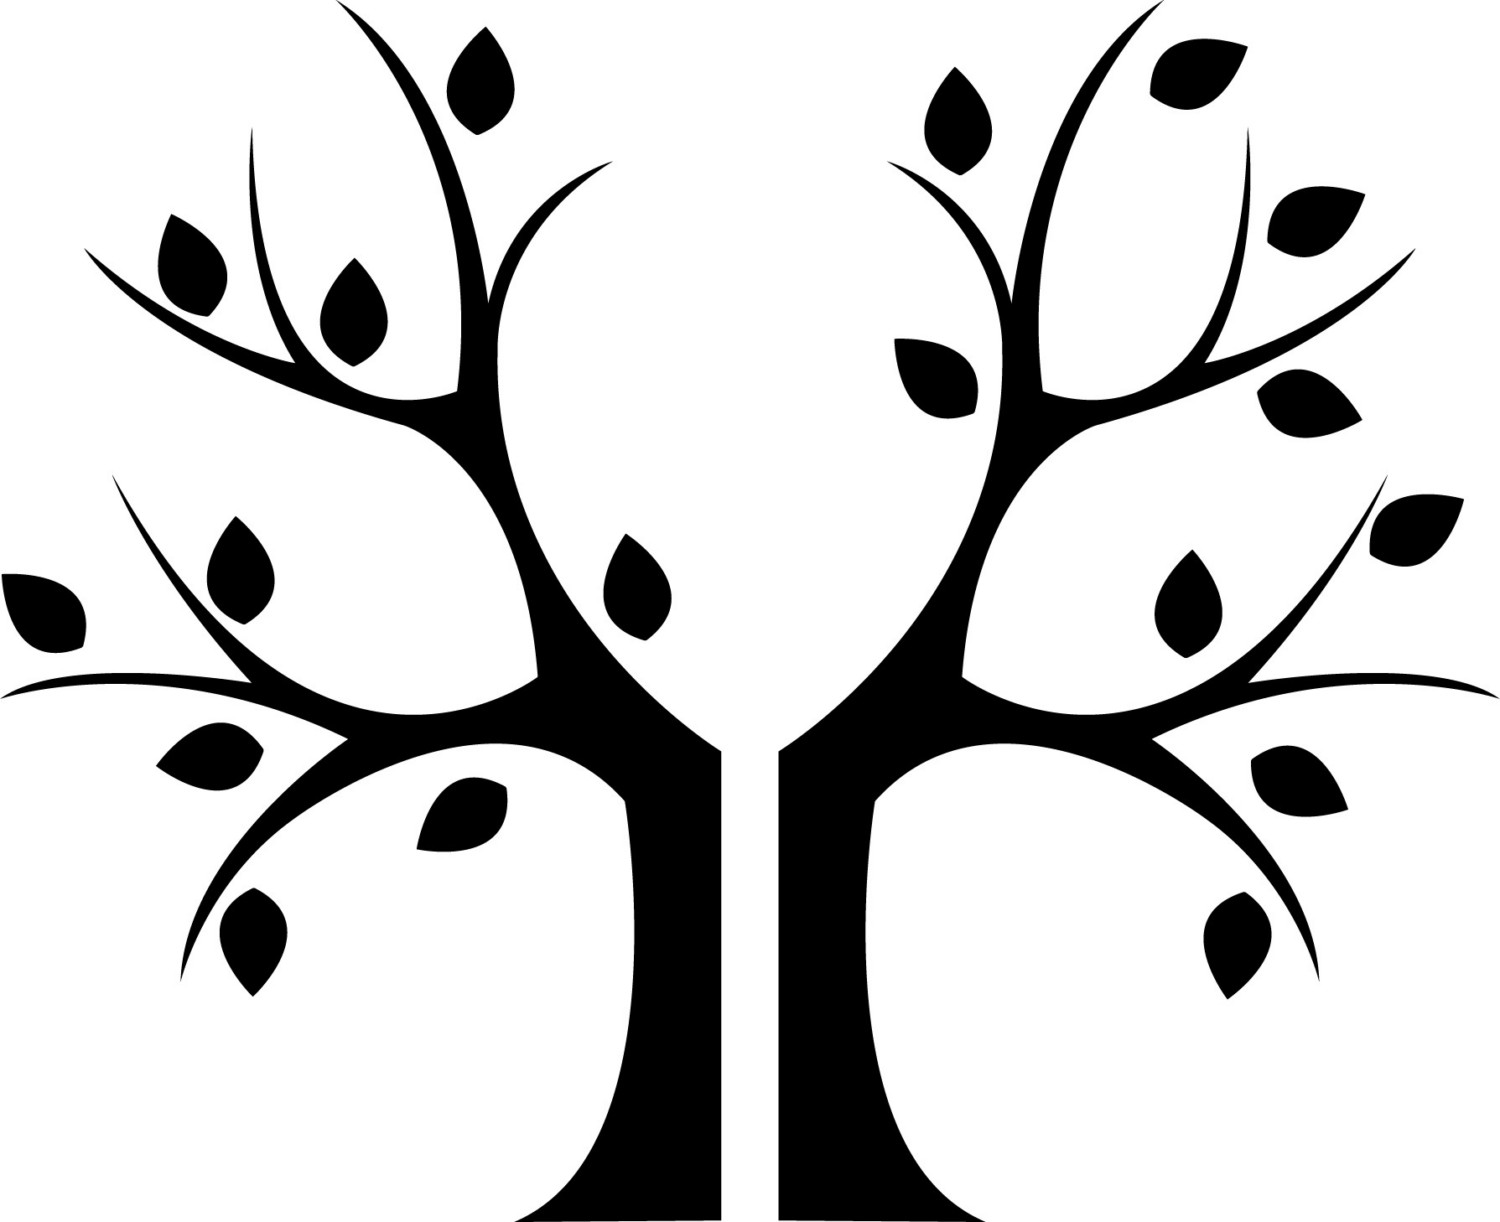 Free Tree Stencil Cliparts, Download Free Tree Stencil Cliparts png